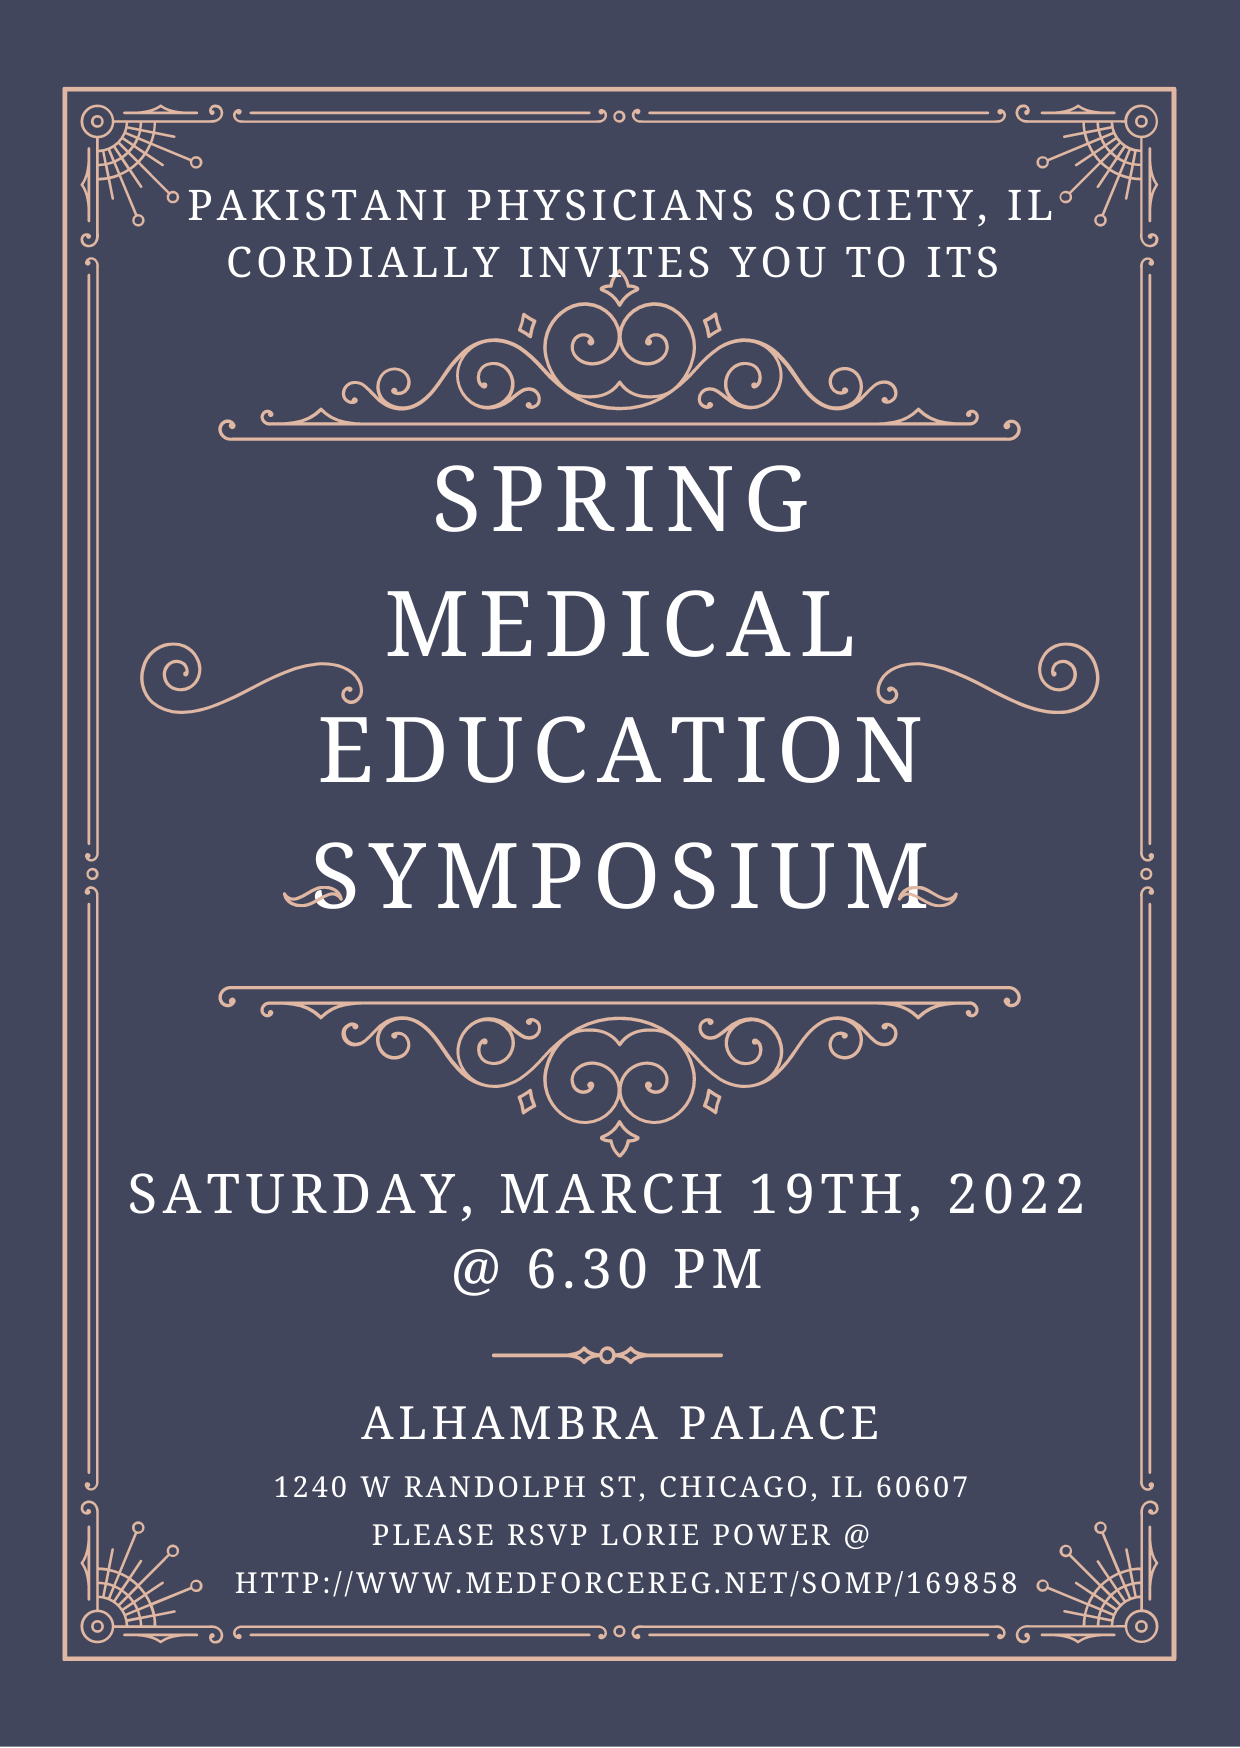 PPS Spring Medical Education Symposium